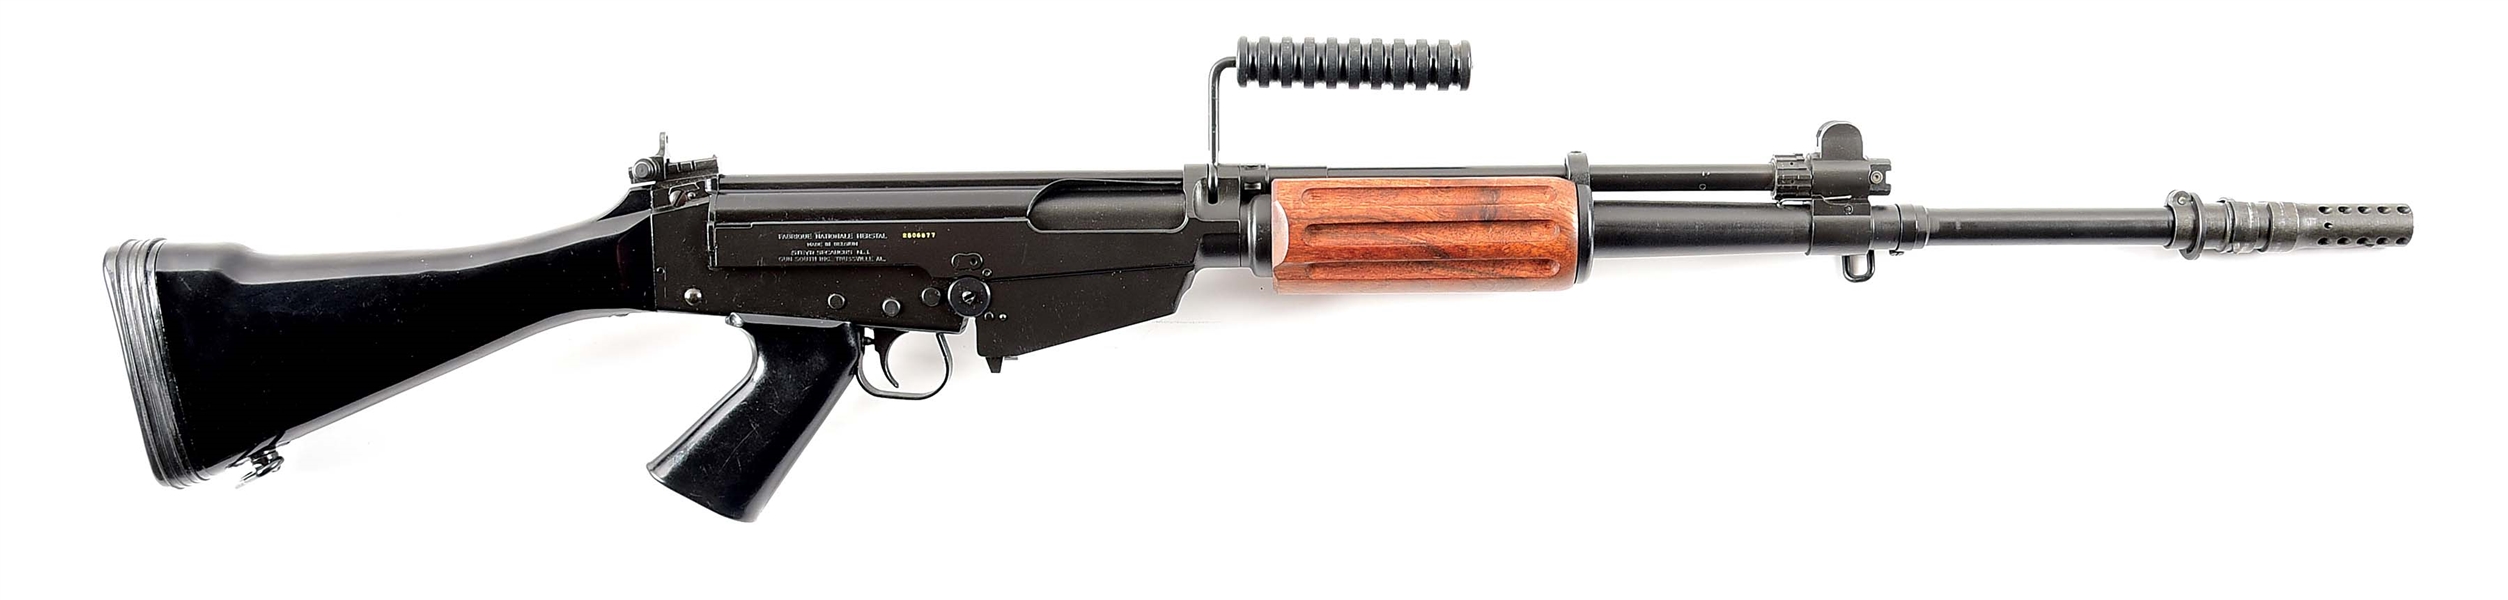 (M) PRE-BAN FN LAR 50.42 .308 MATCH SEMI-AUTOMATIC RIFLE.